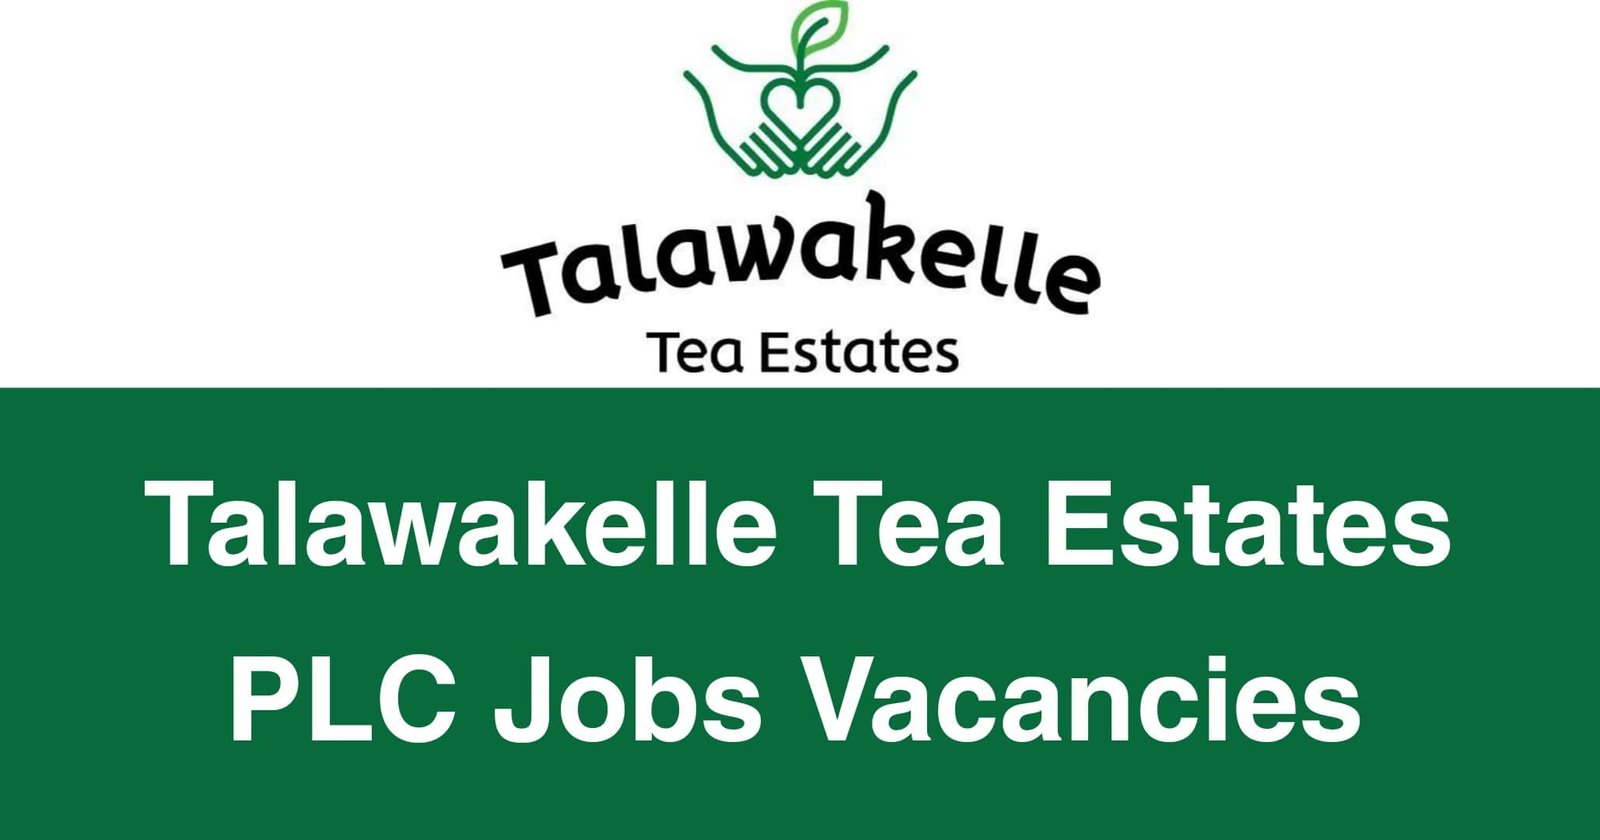 Talawakelle Tea Estates PLC Jobs Vacancies